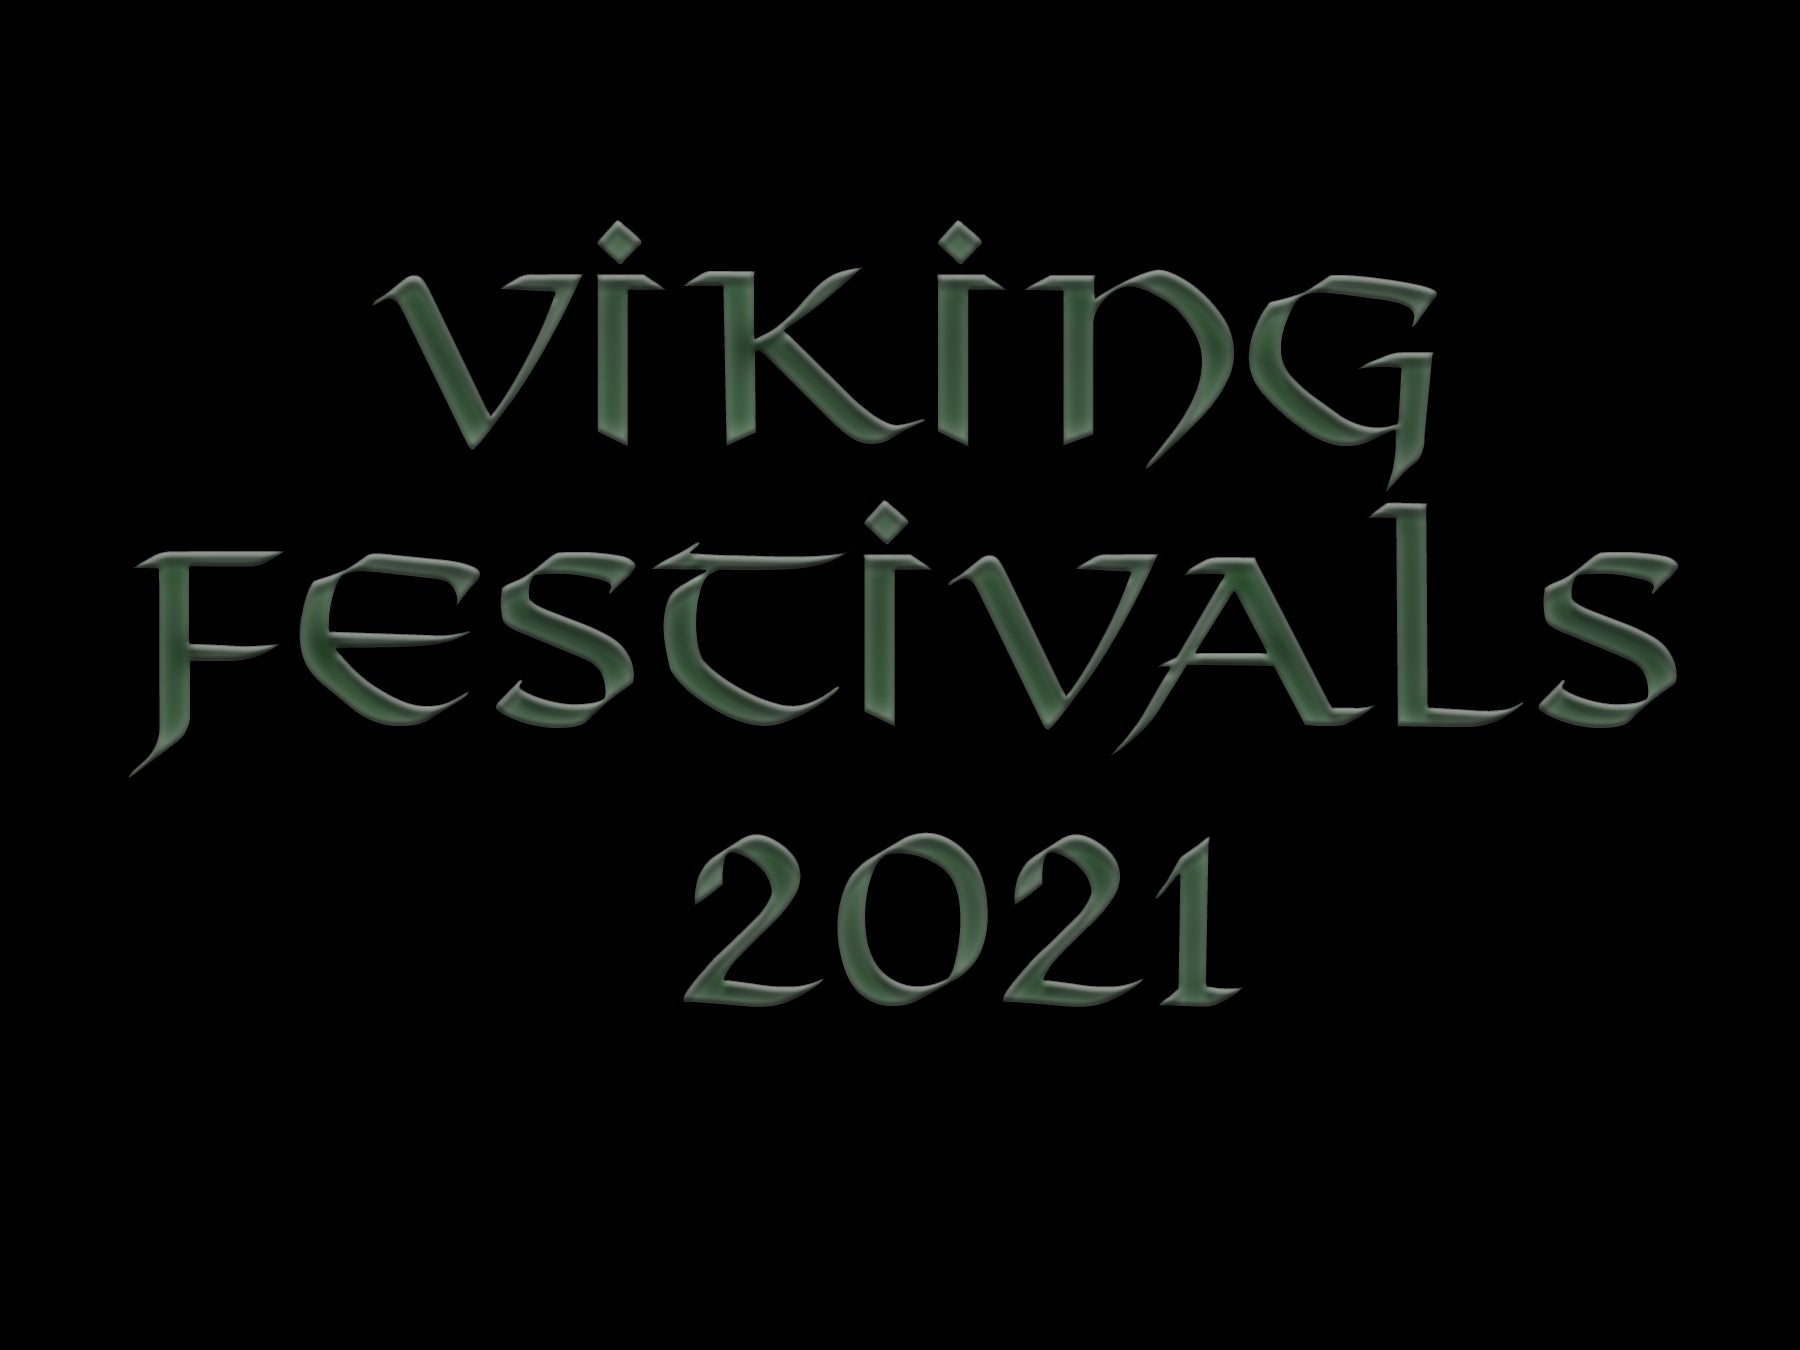 European Viking Festivals and Viking Markets 2021